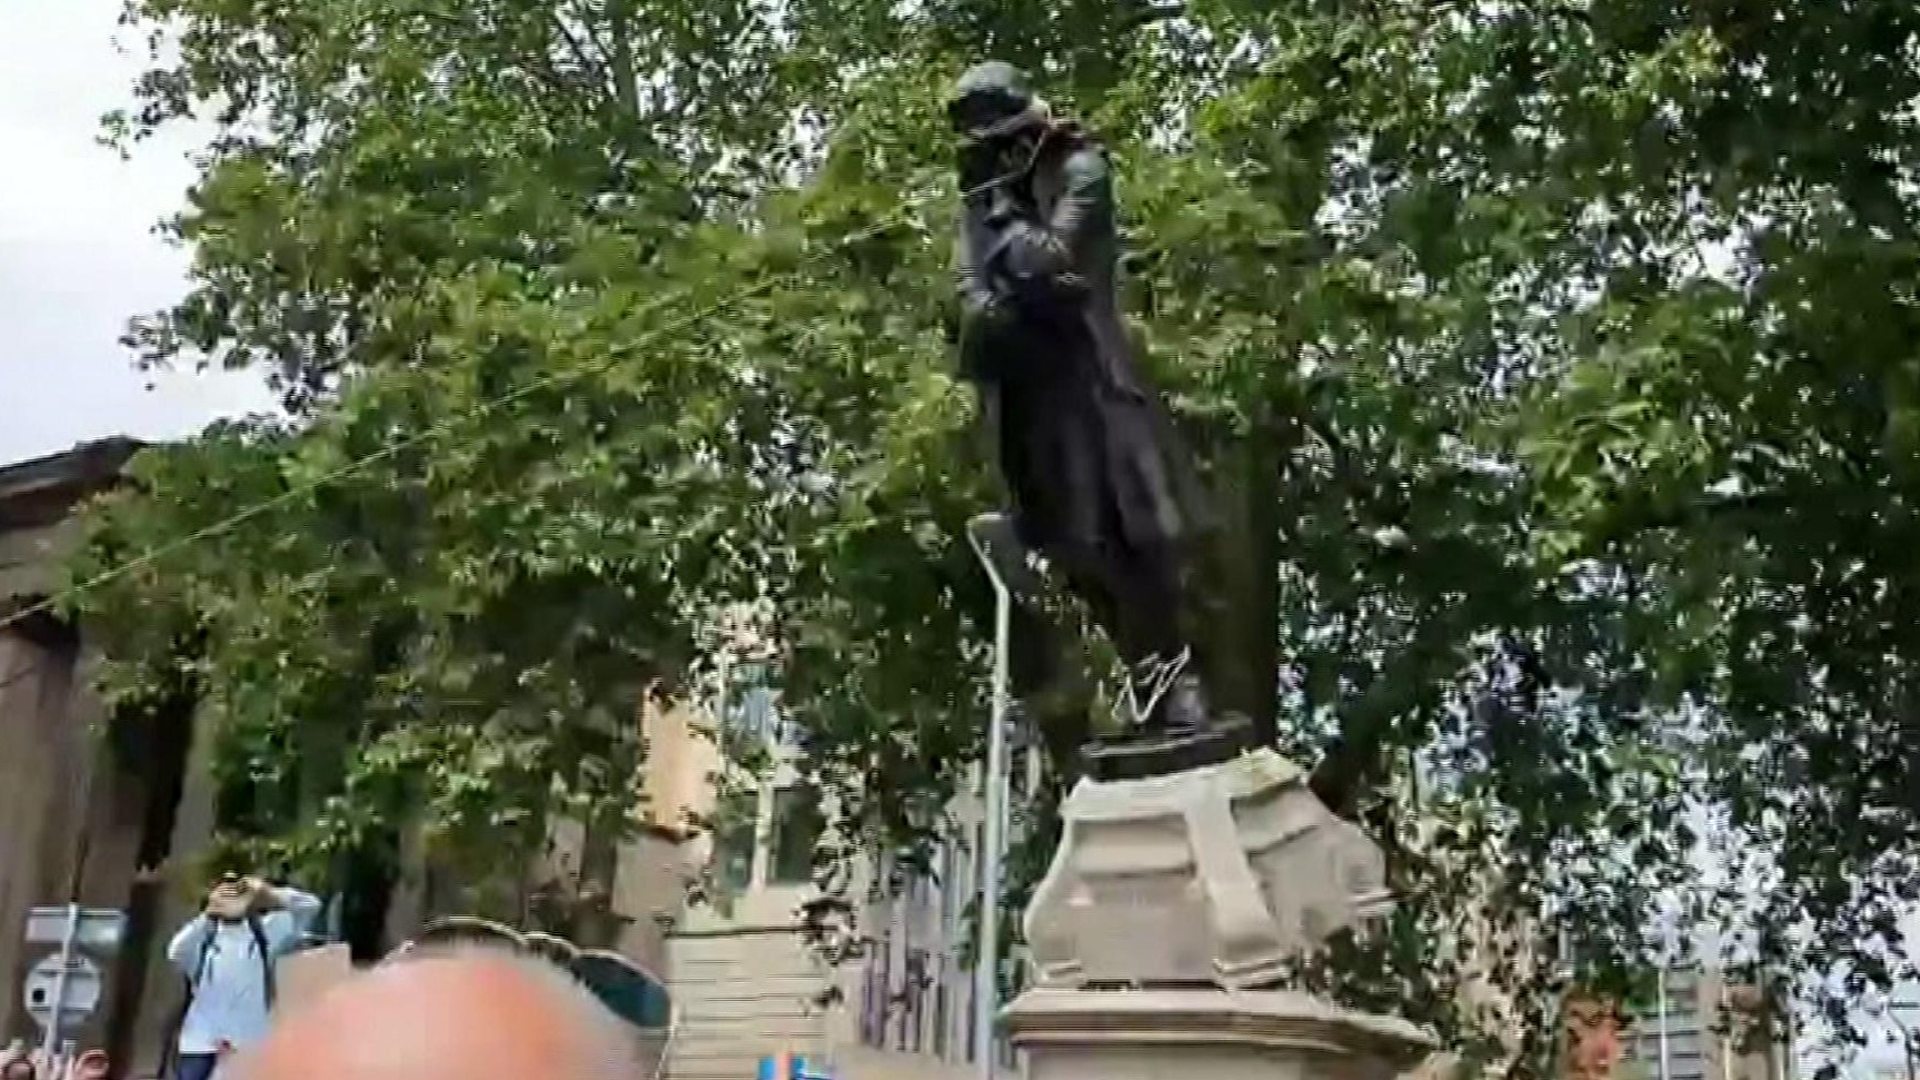 Slave trader statue torn down in Bristol